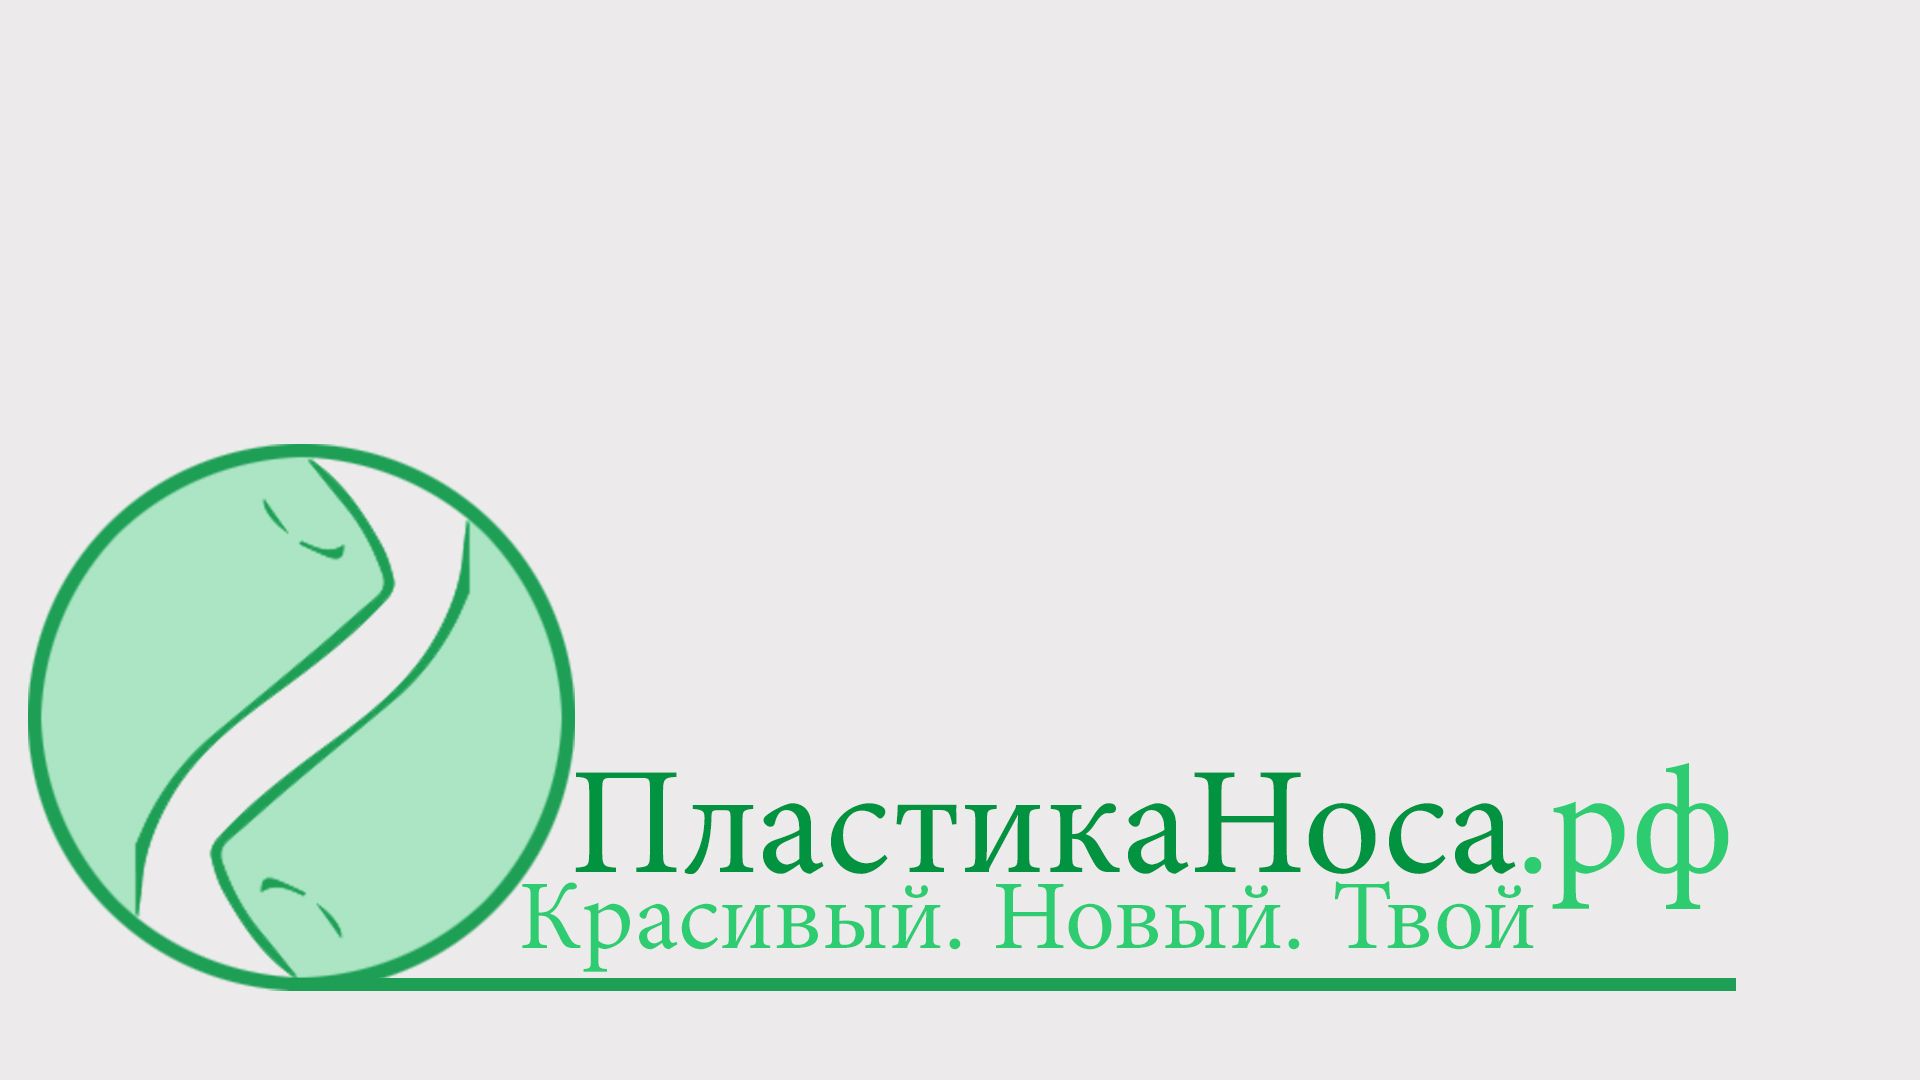 Логотип ПластикаНоса.рф - дизайнер cheh1603